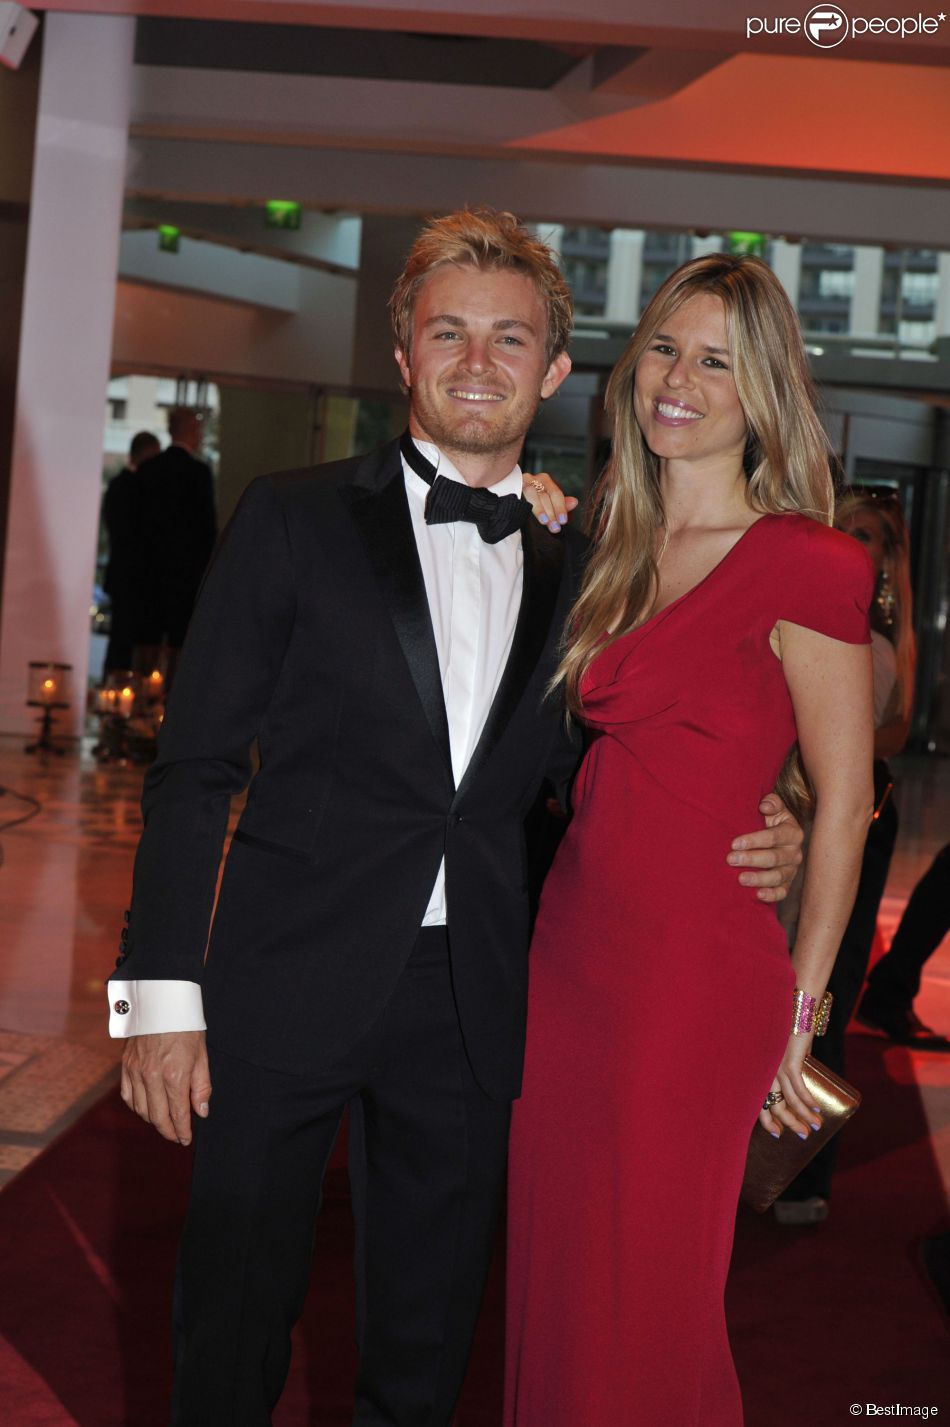 Nico Rosberg couple